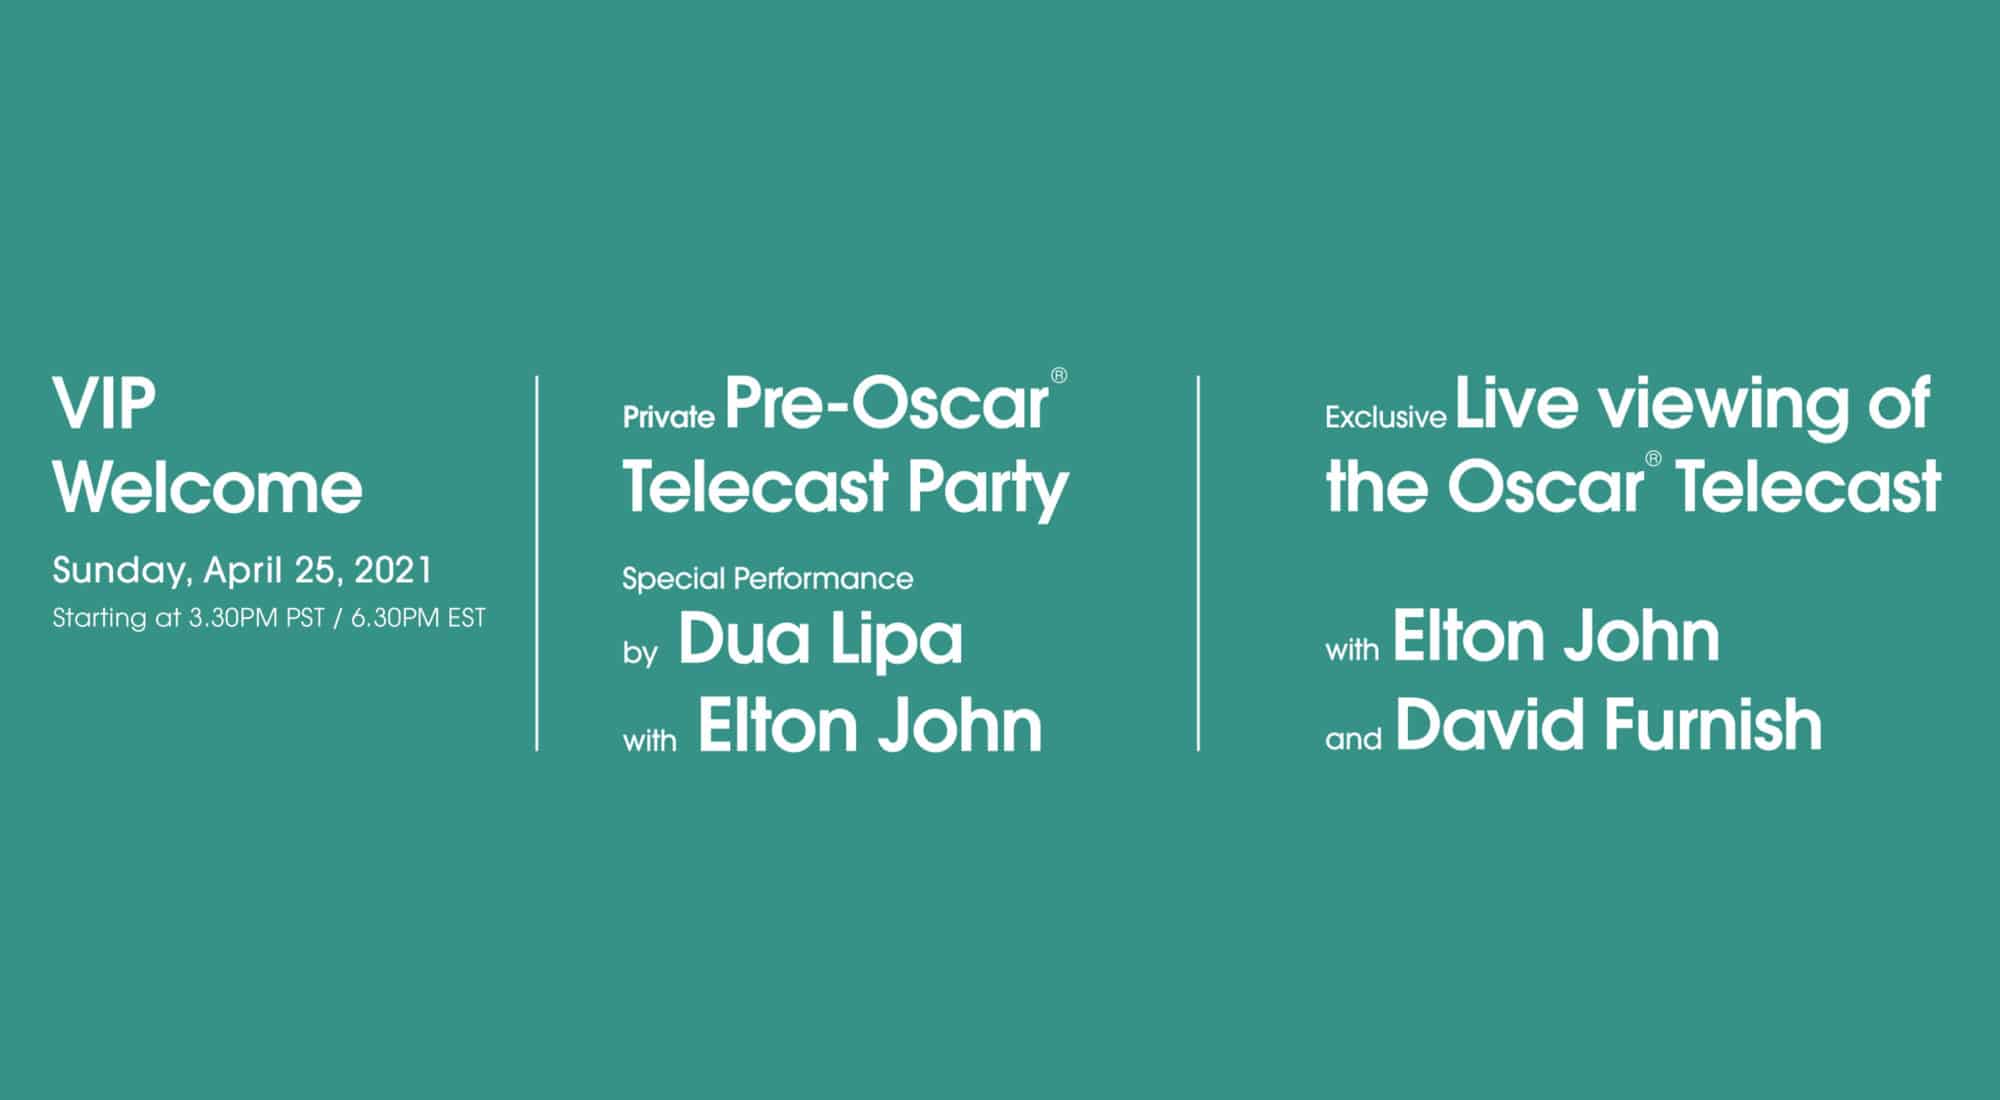 Dua Lipa in Balenciaga  2021 Elton John AIDS Foundation Academy Awards  Viewing Party – The Fashion Court